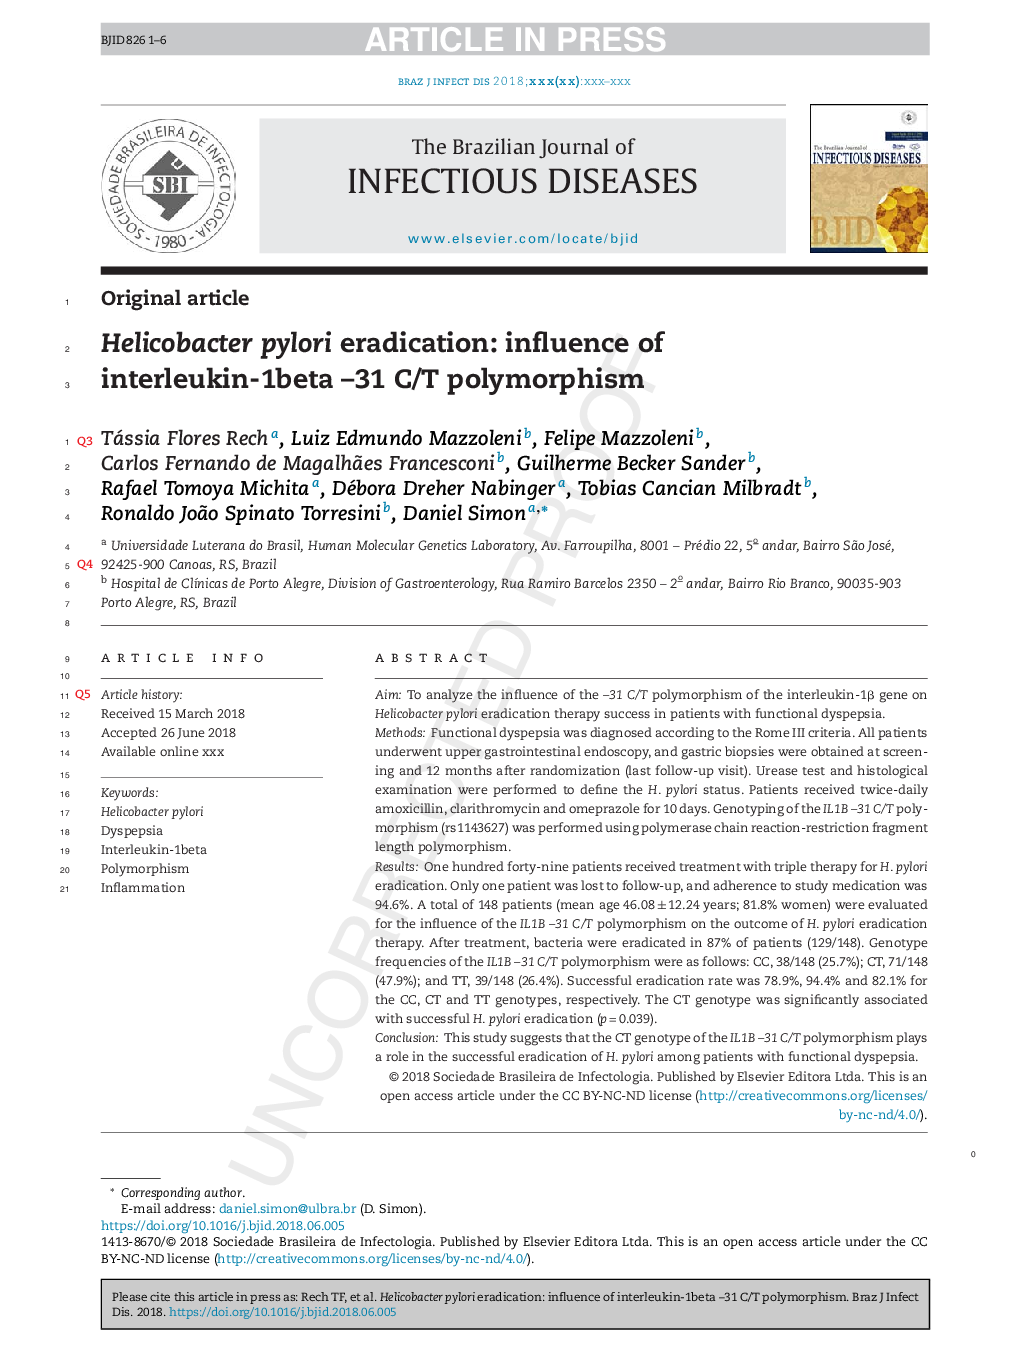 Helicobacter pylori eradication: influence of interleukin-1beta -31 C/T polymorphism